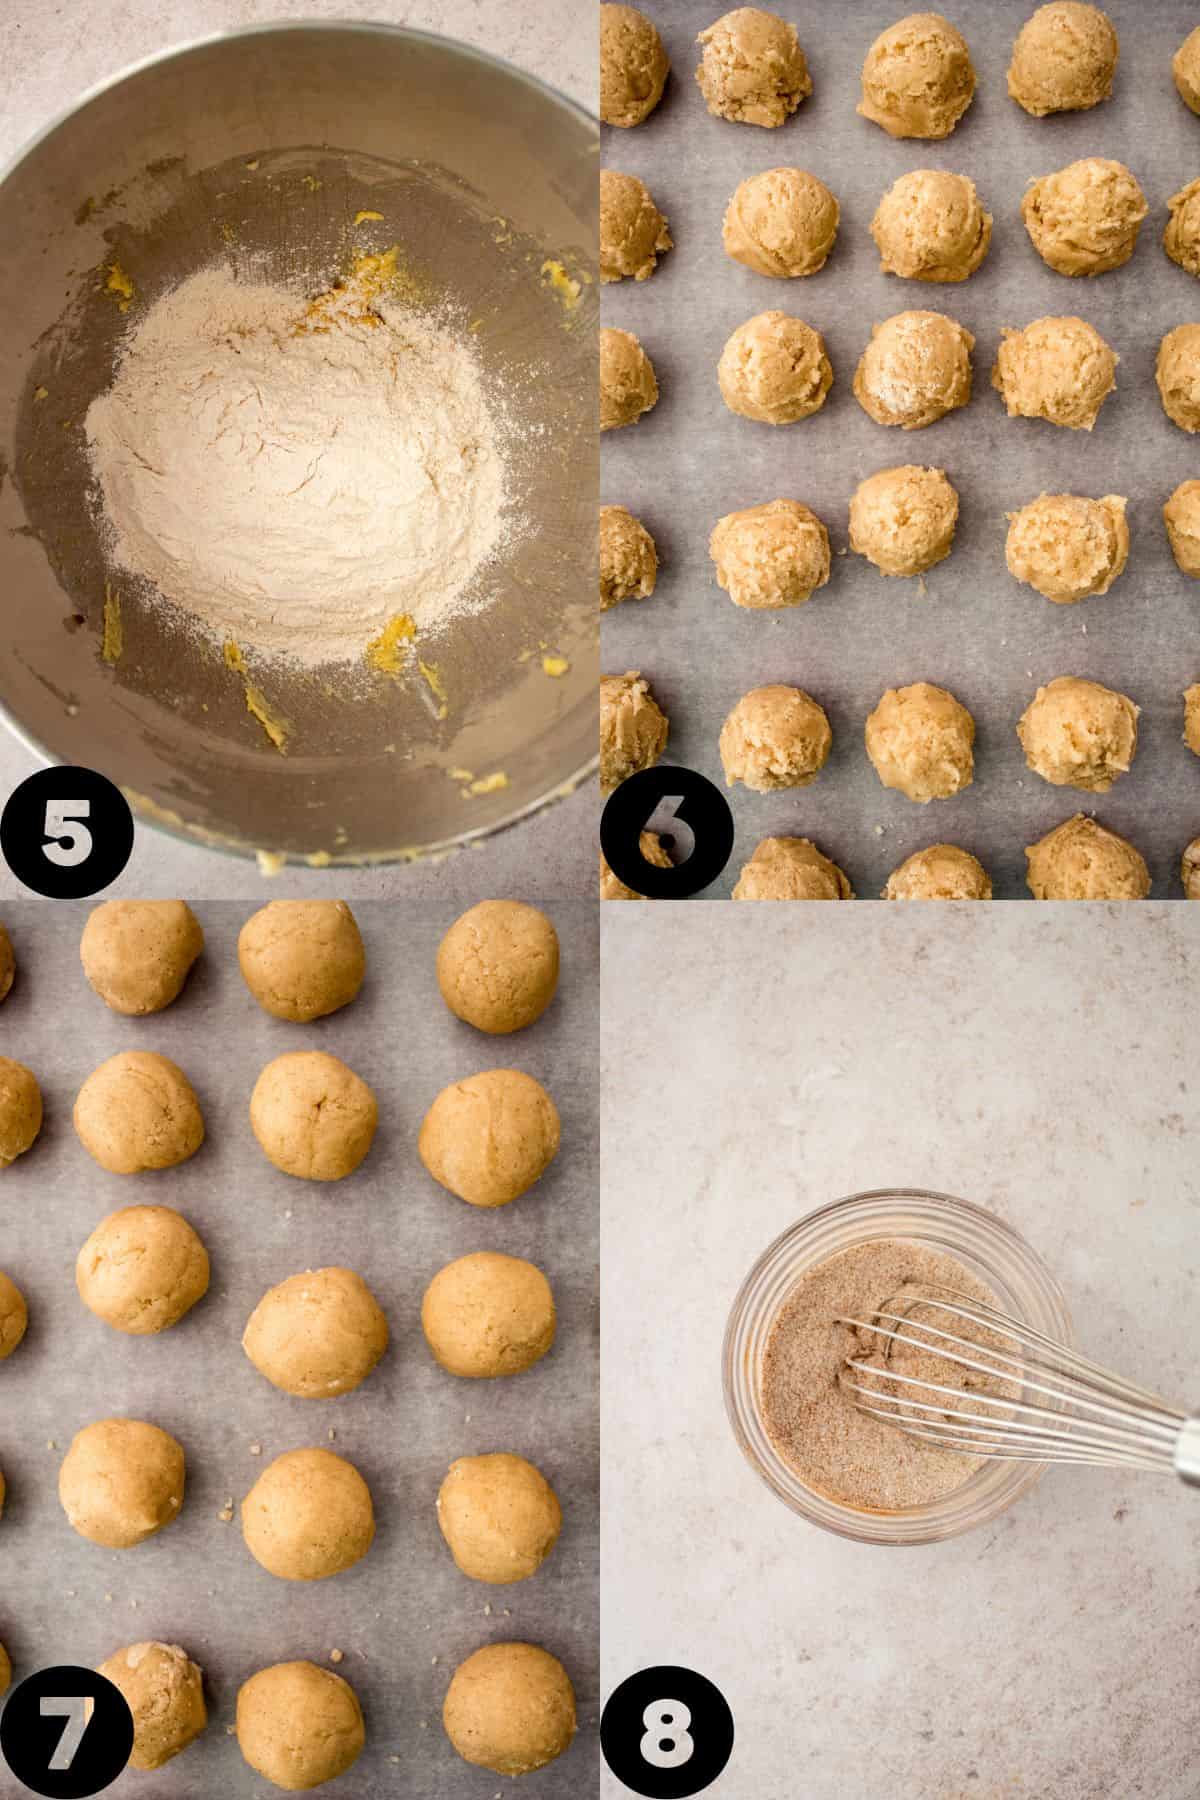 flour mixture added, dough scooped into balls, making chai sugar rolling sugar